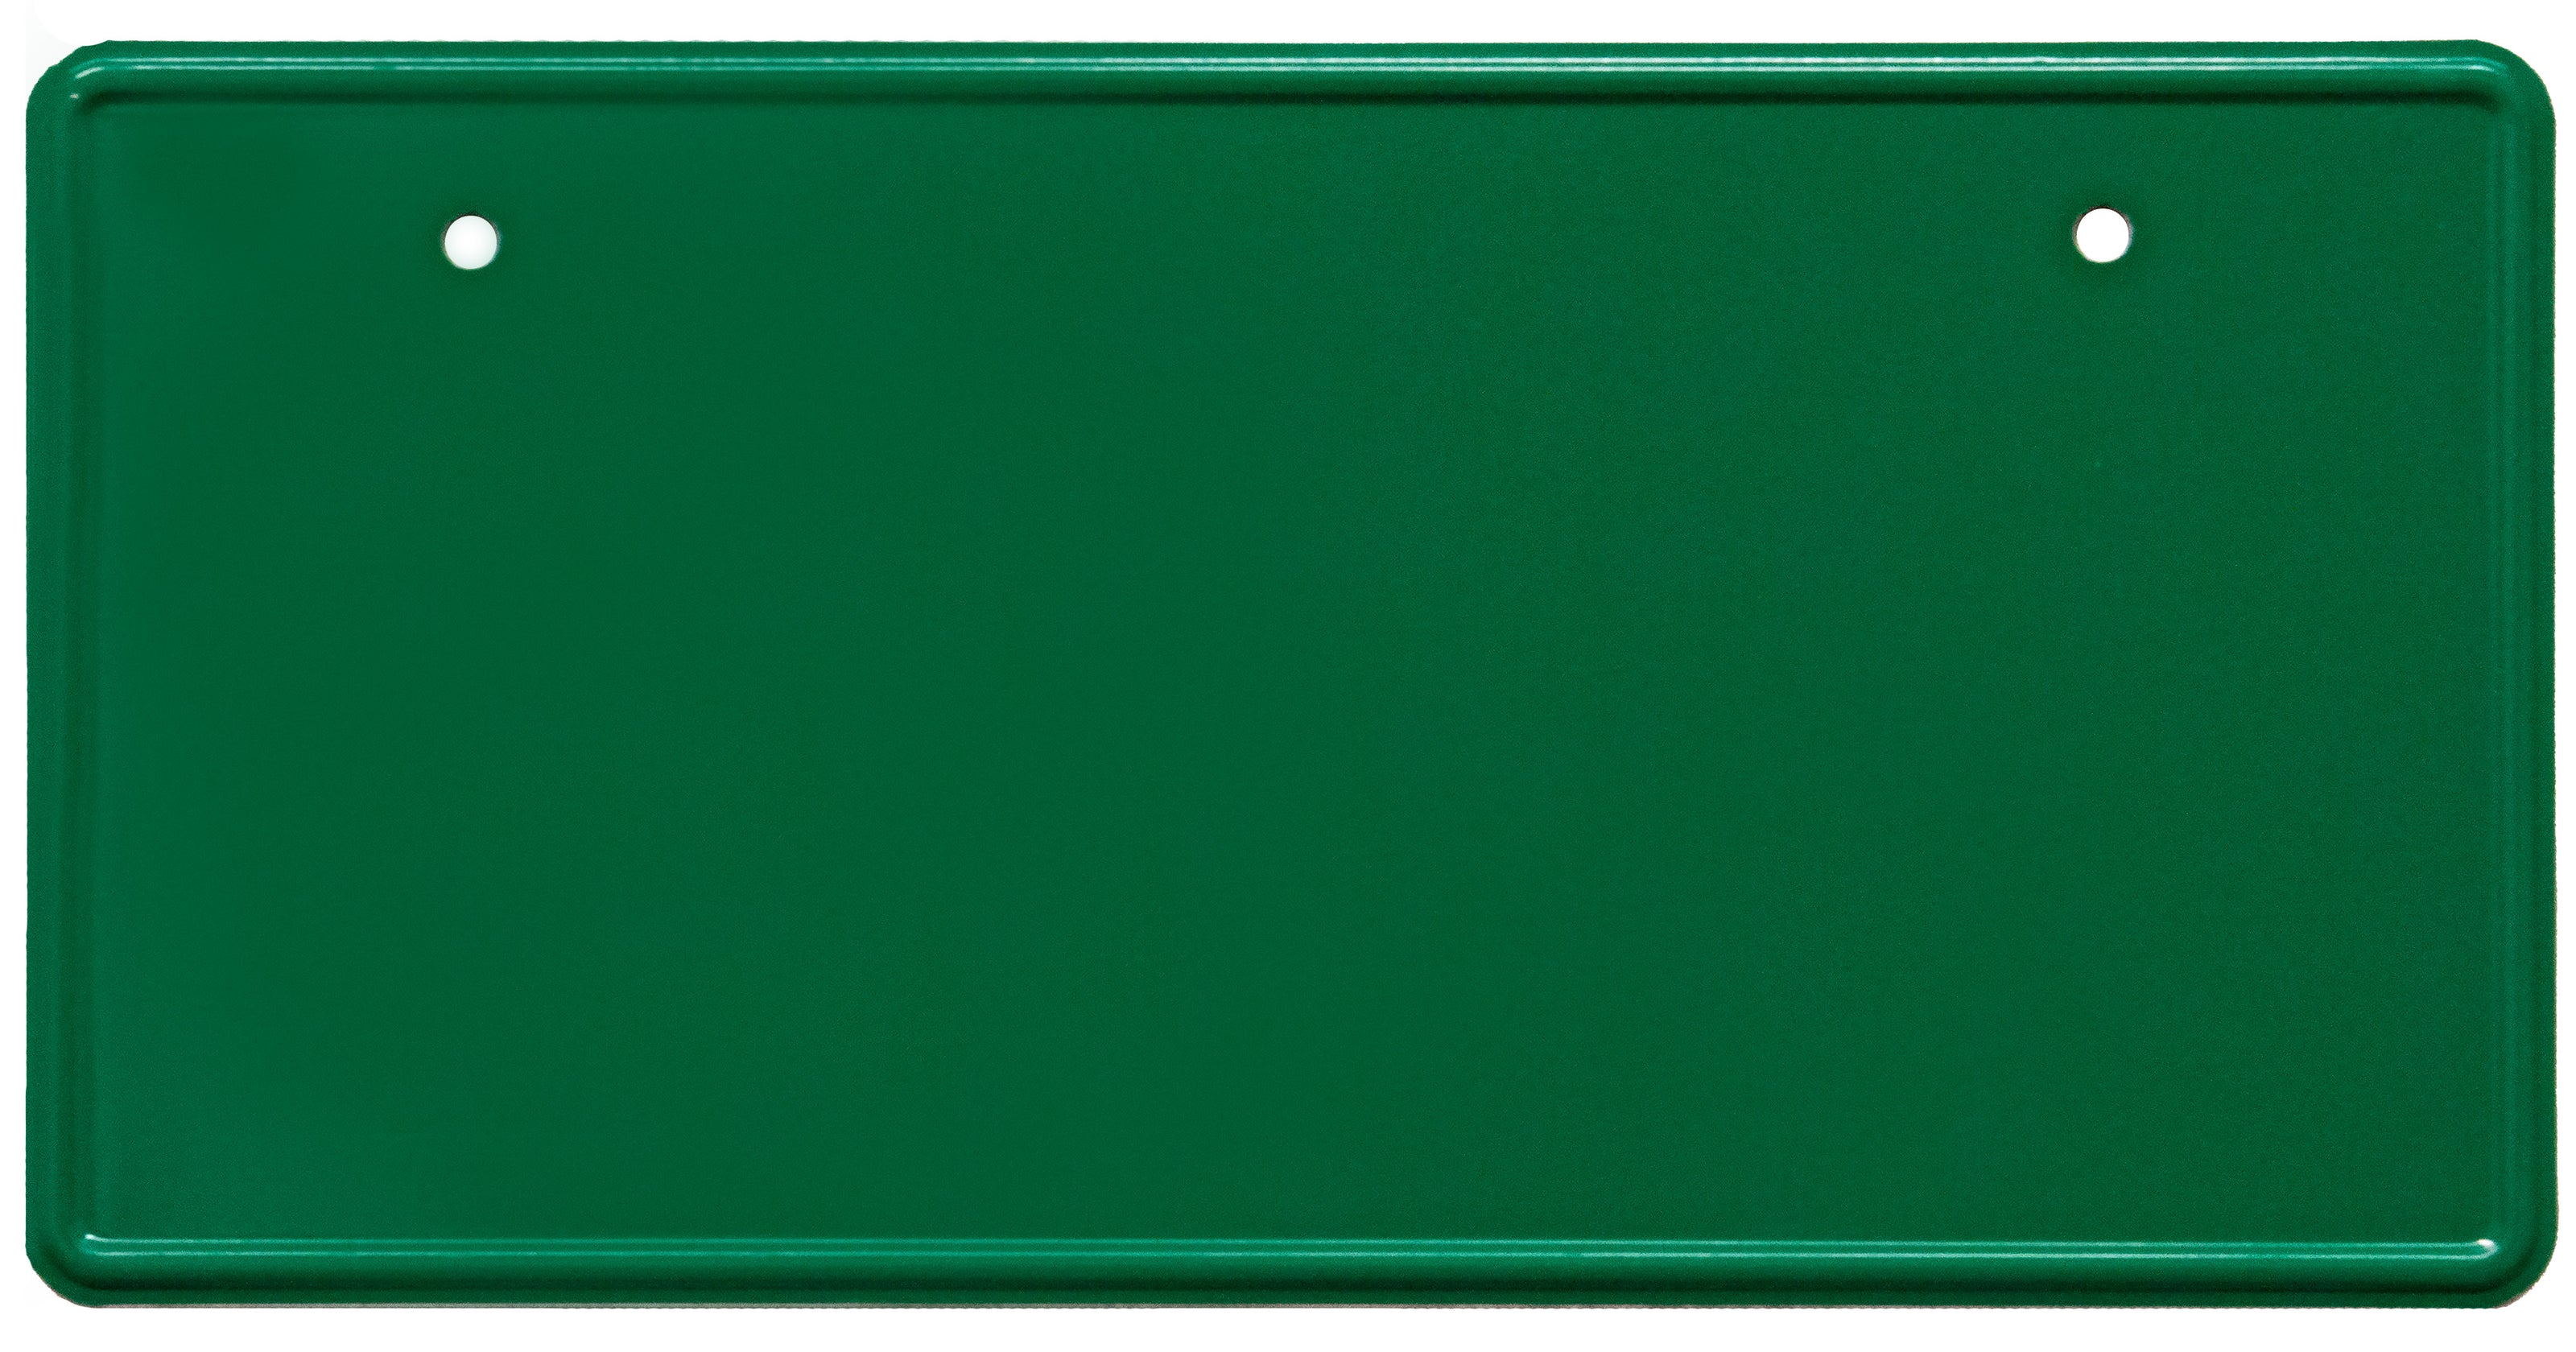 Green Japanese license plate